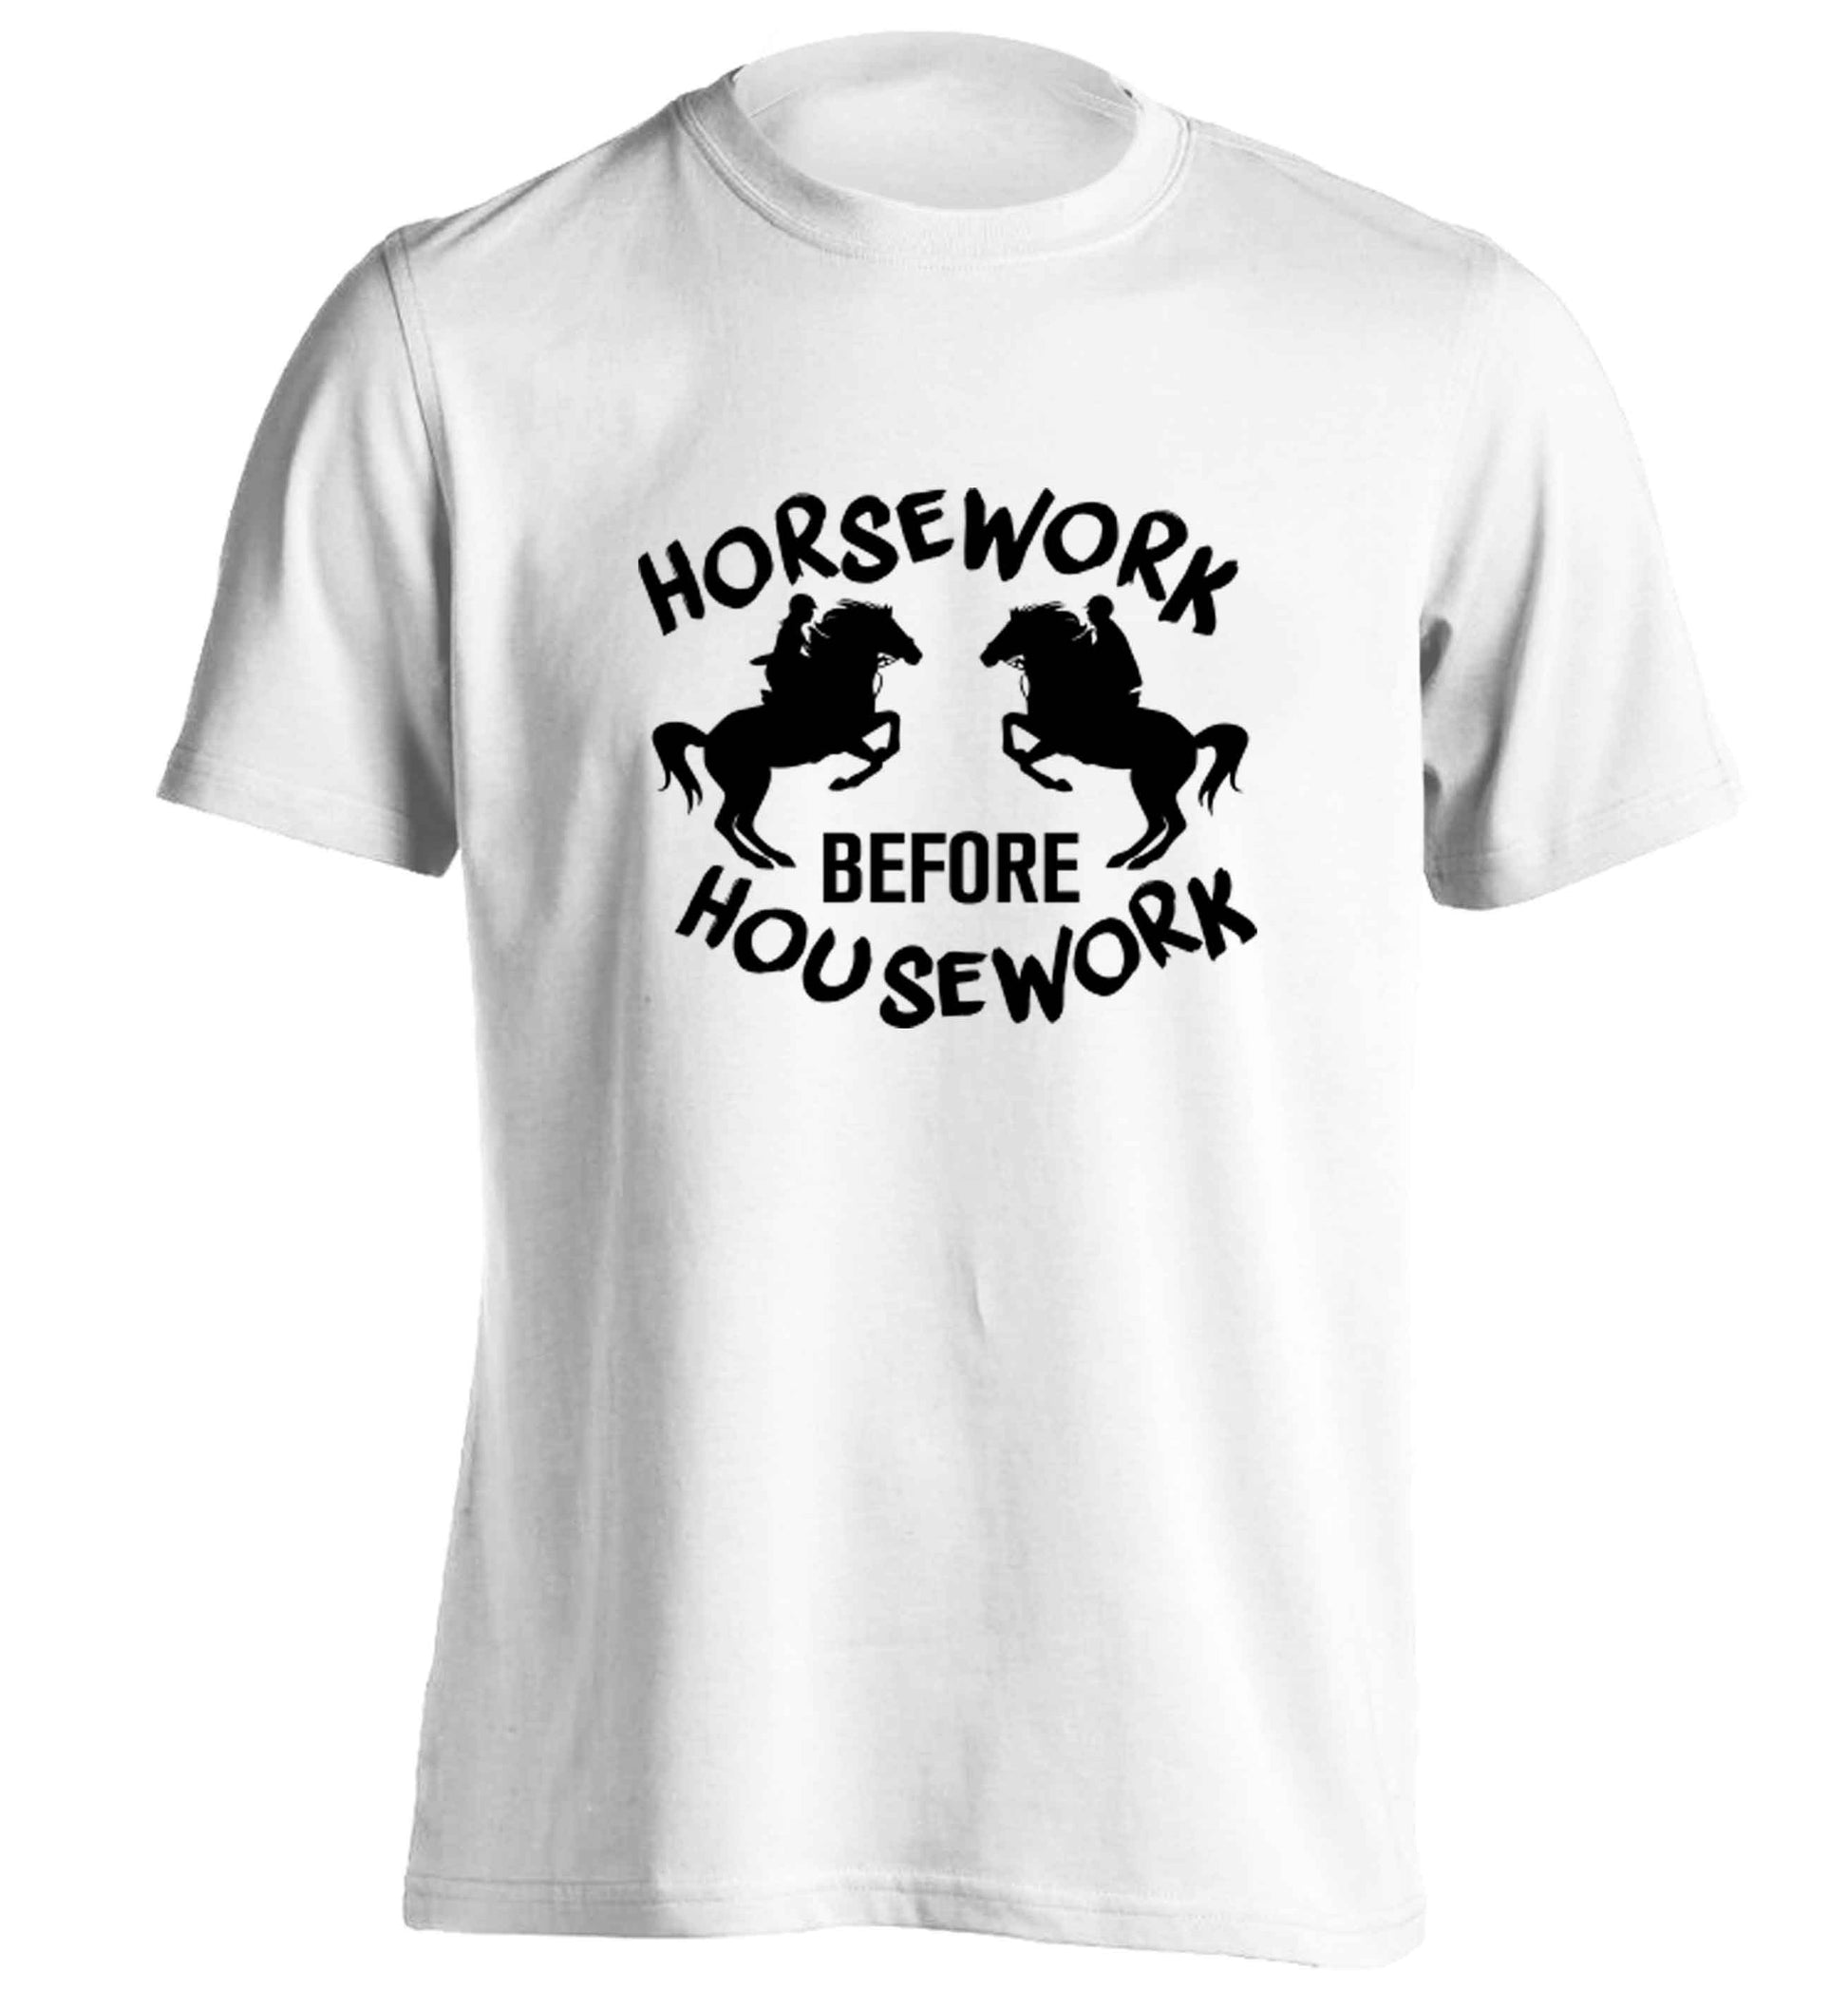 Horsework before housework adults unisex white Tshirt 2XL